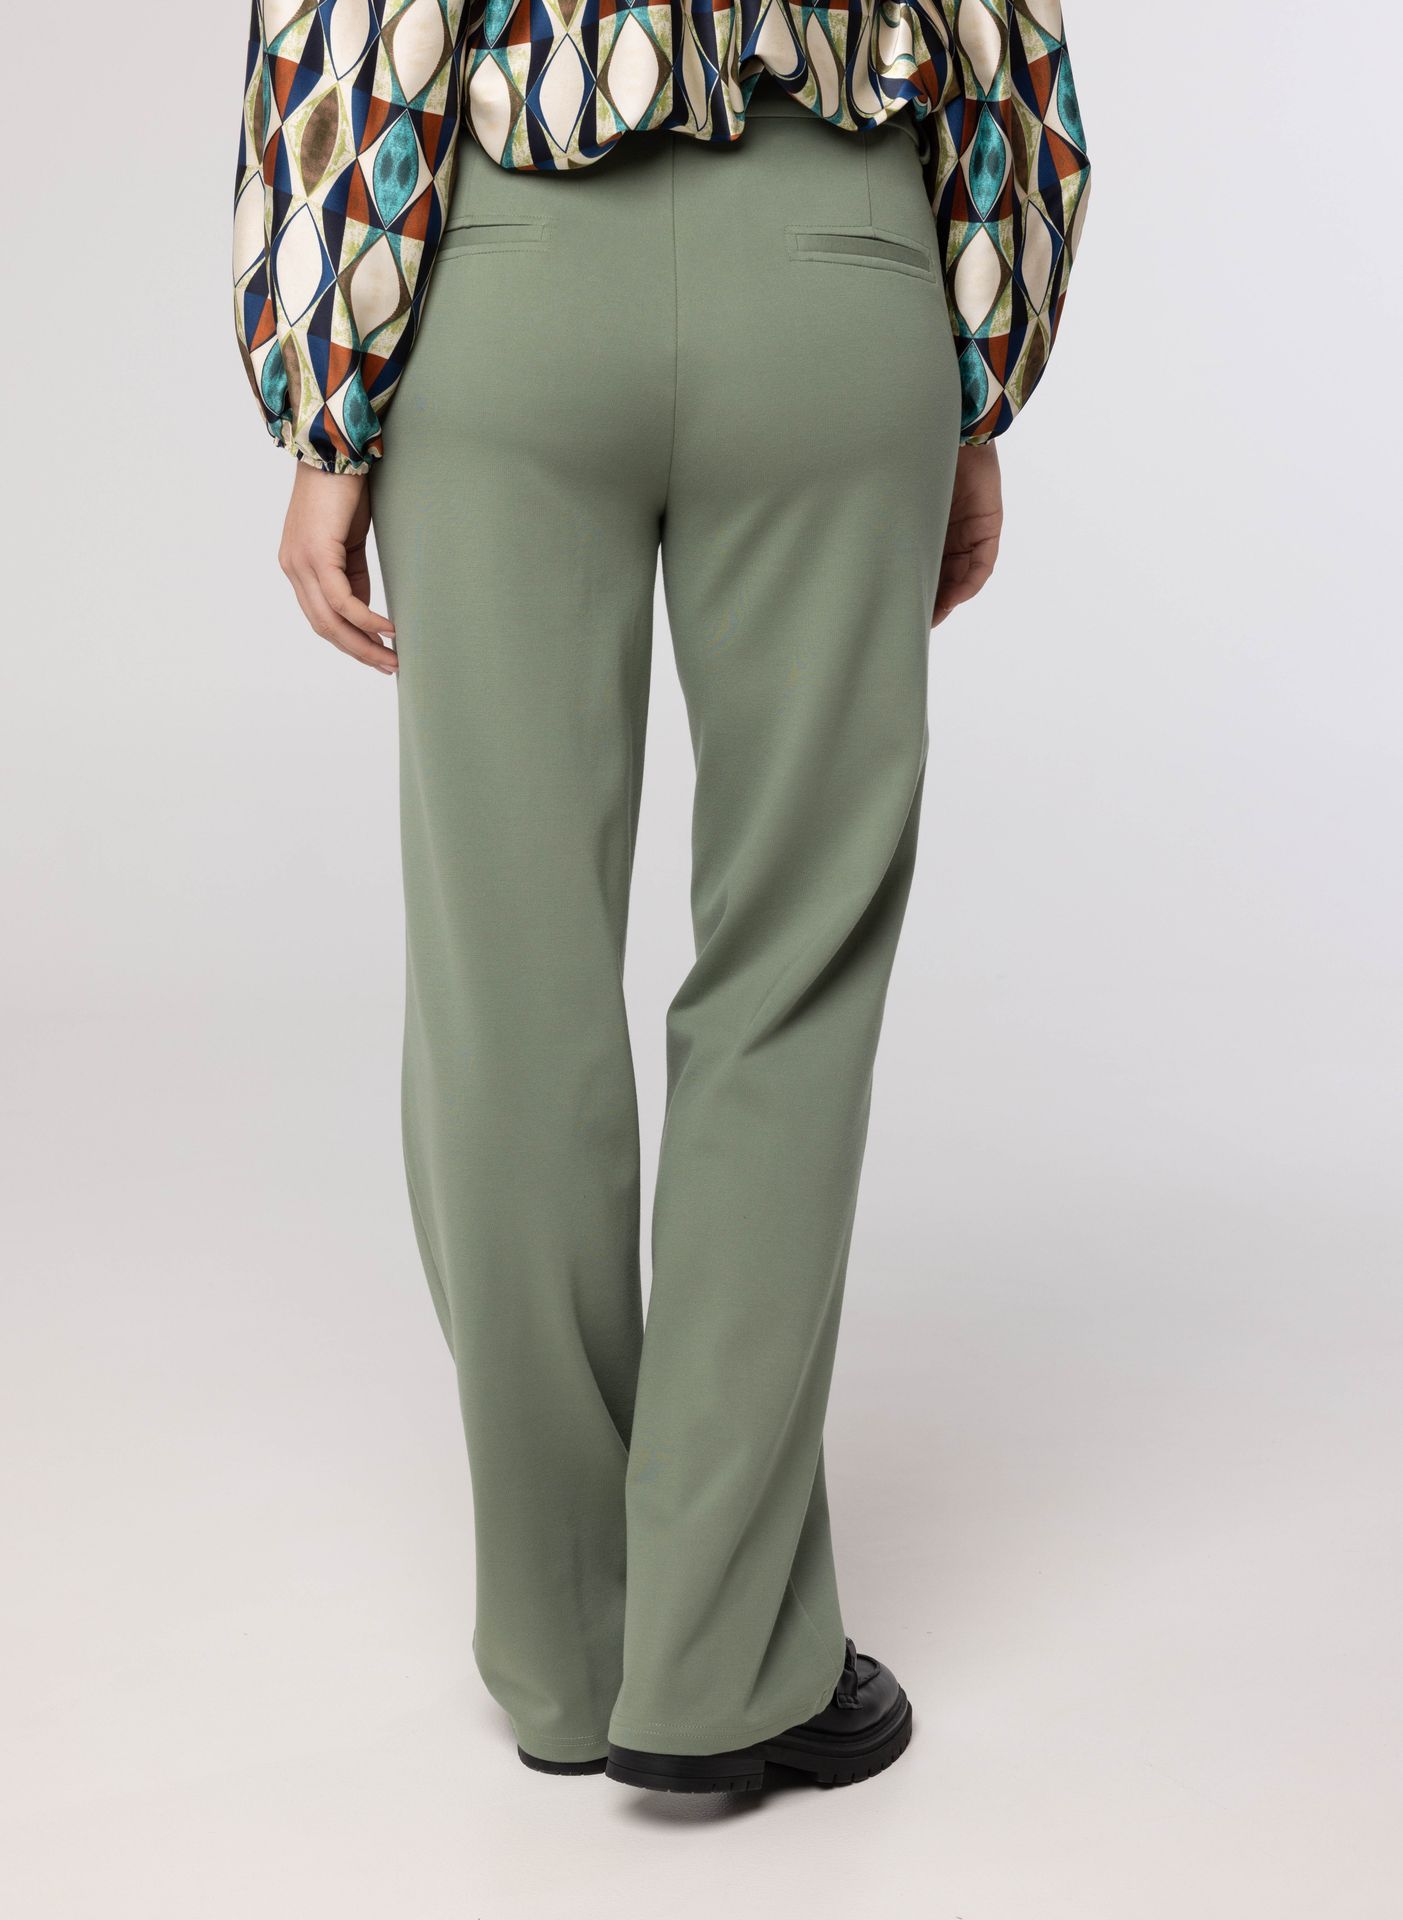 Norah Groene pantalon green/grey 213502-540